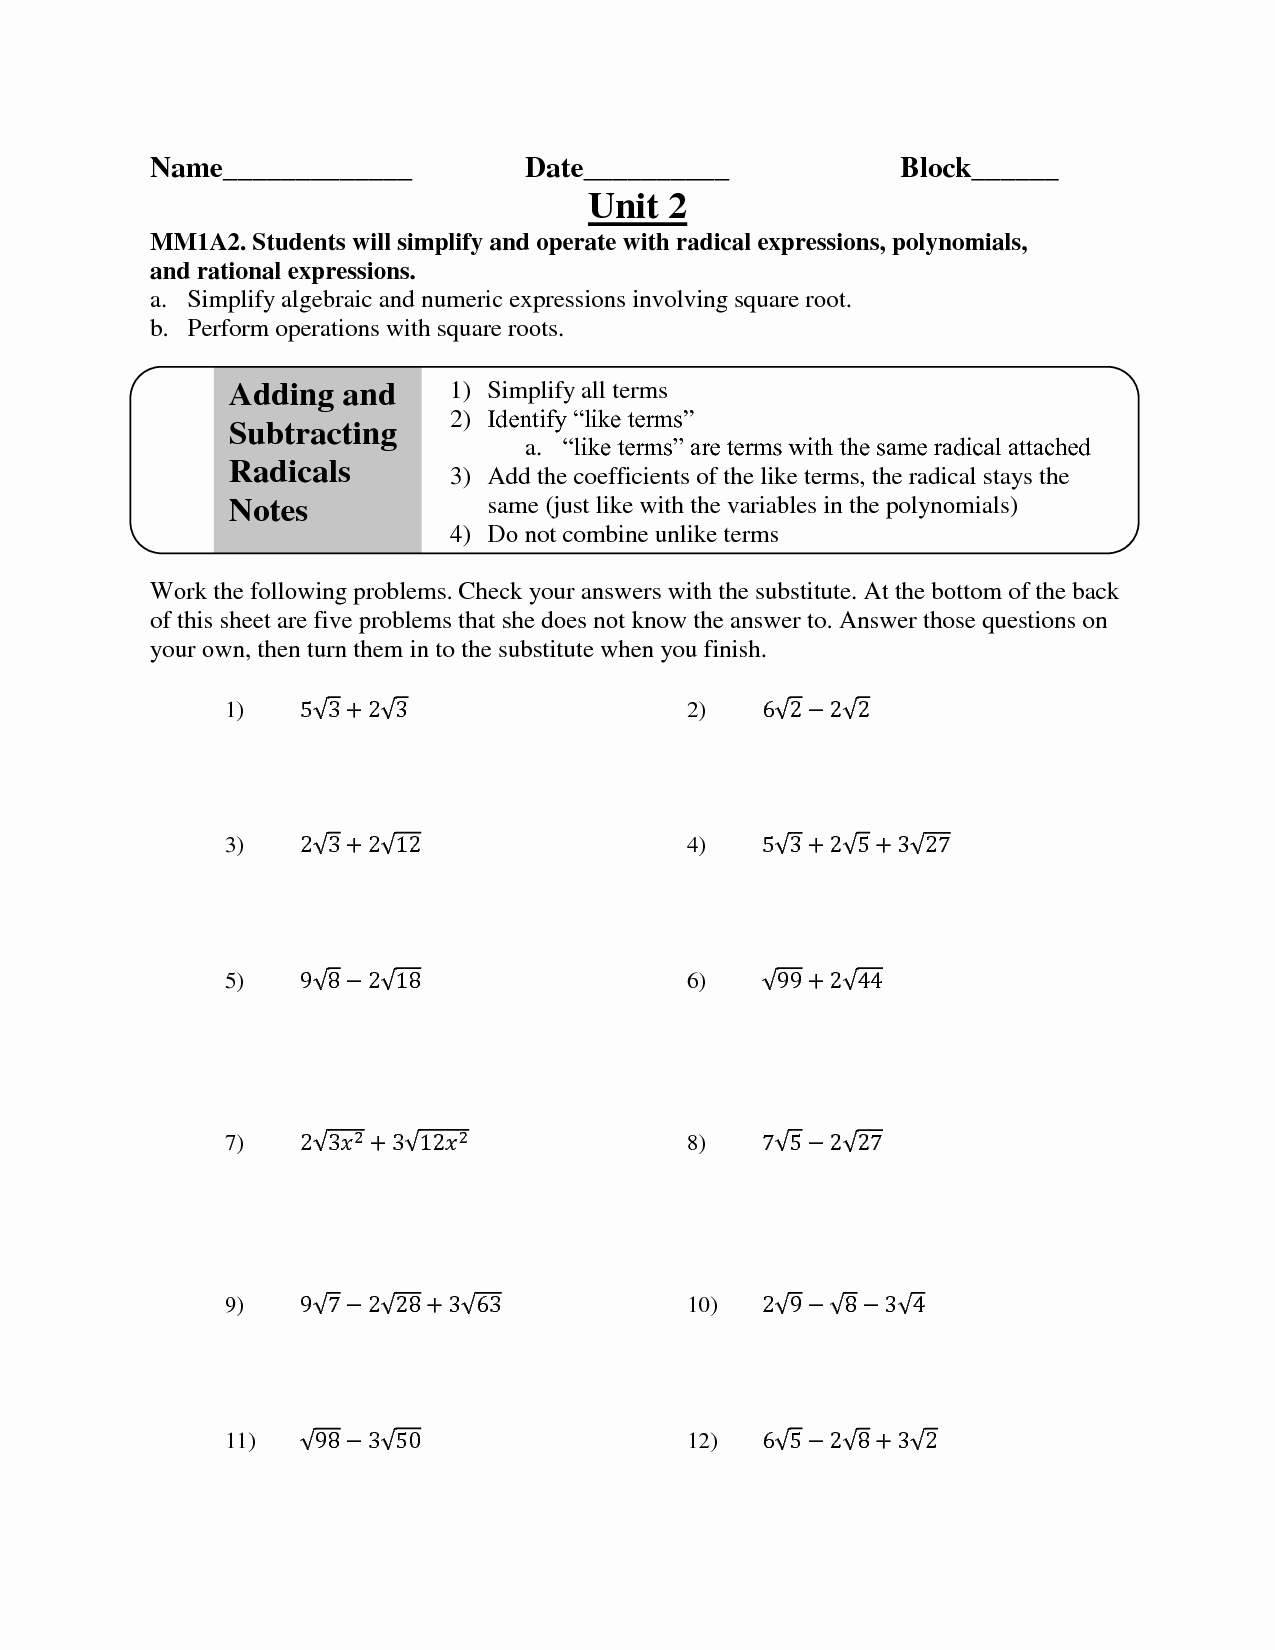 Adding Subtracting Polynomials Worksheet Awesome Adding Subtracting and Multiplying Polynomials Worksheet